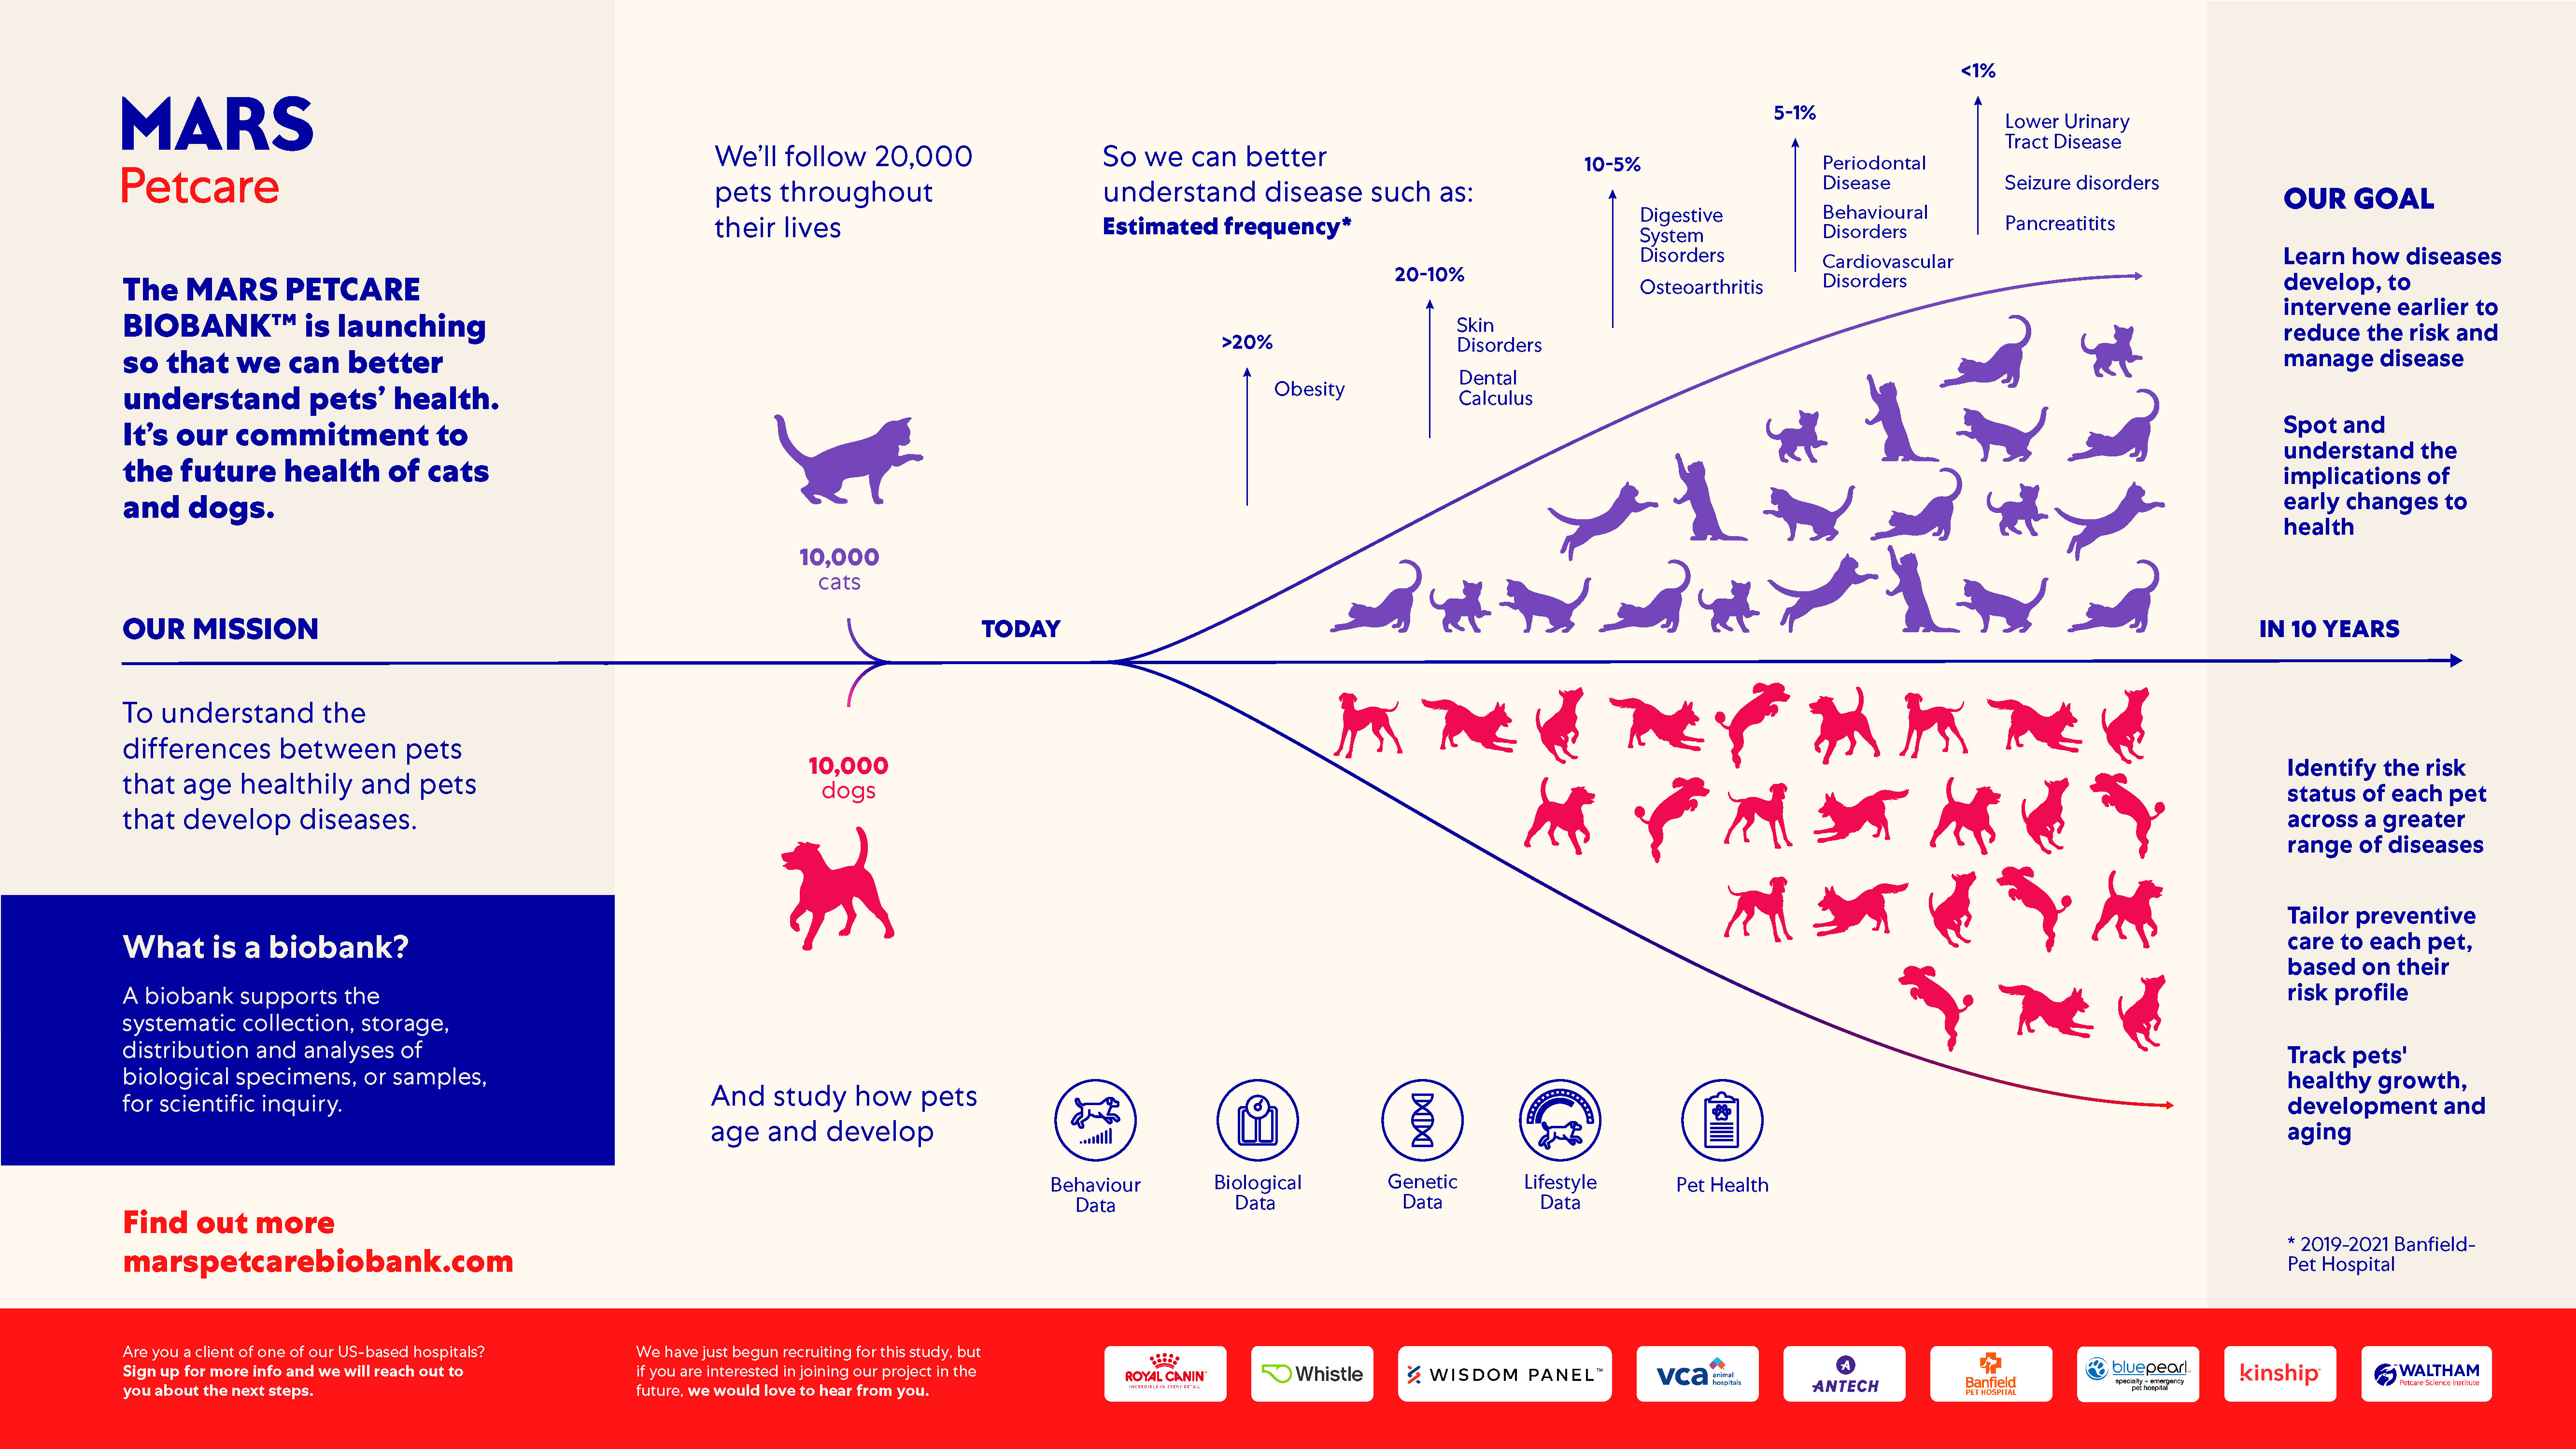 An infographic explaining the Mars Petcare Biobank's goal